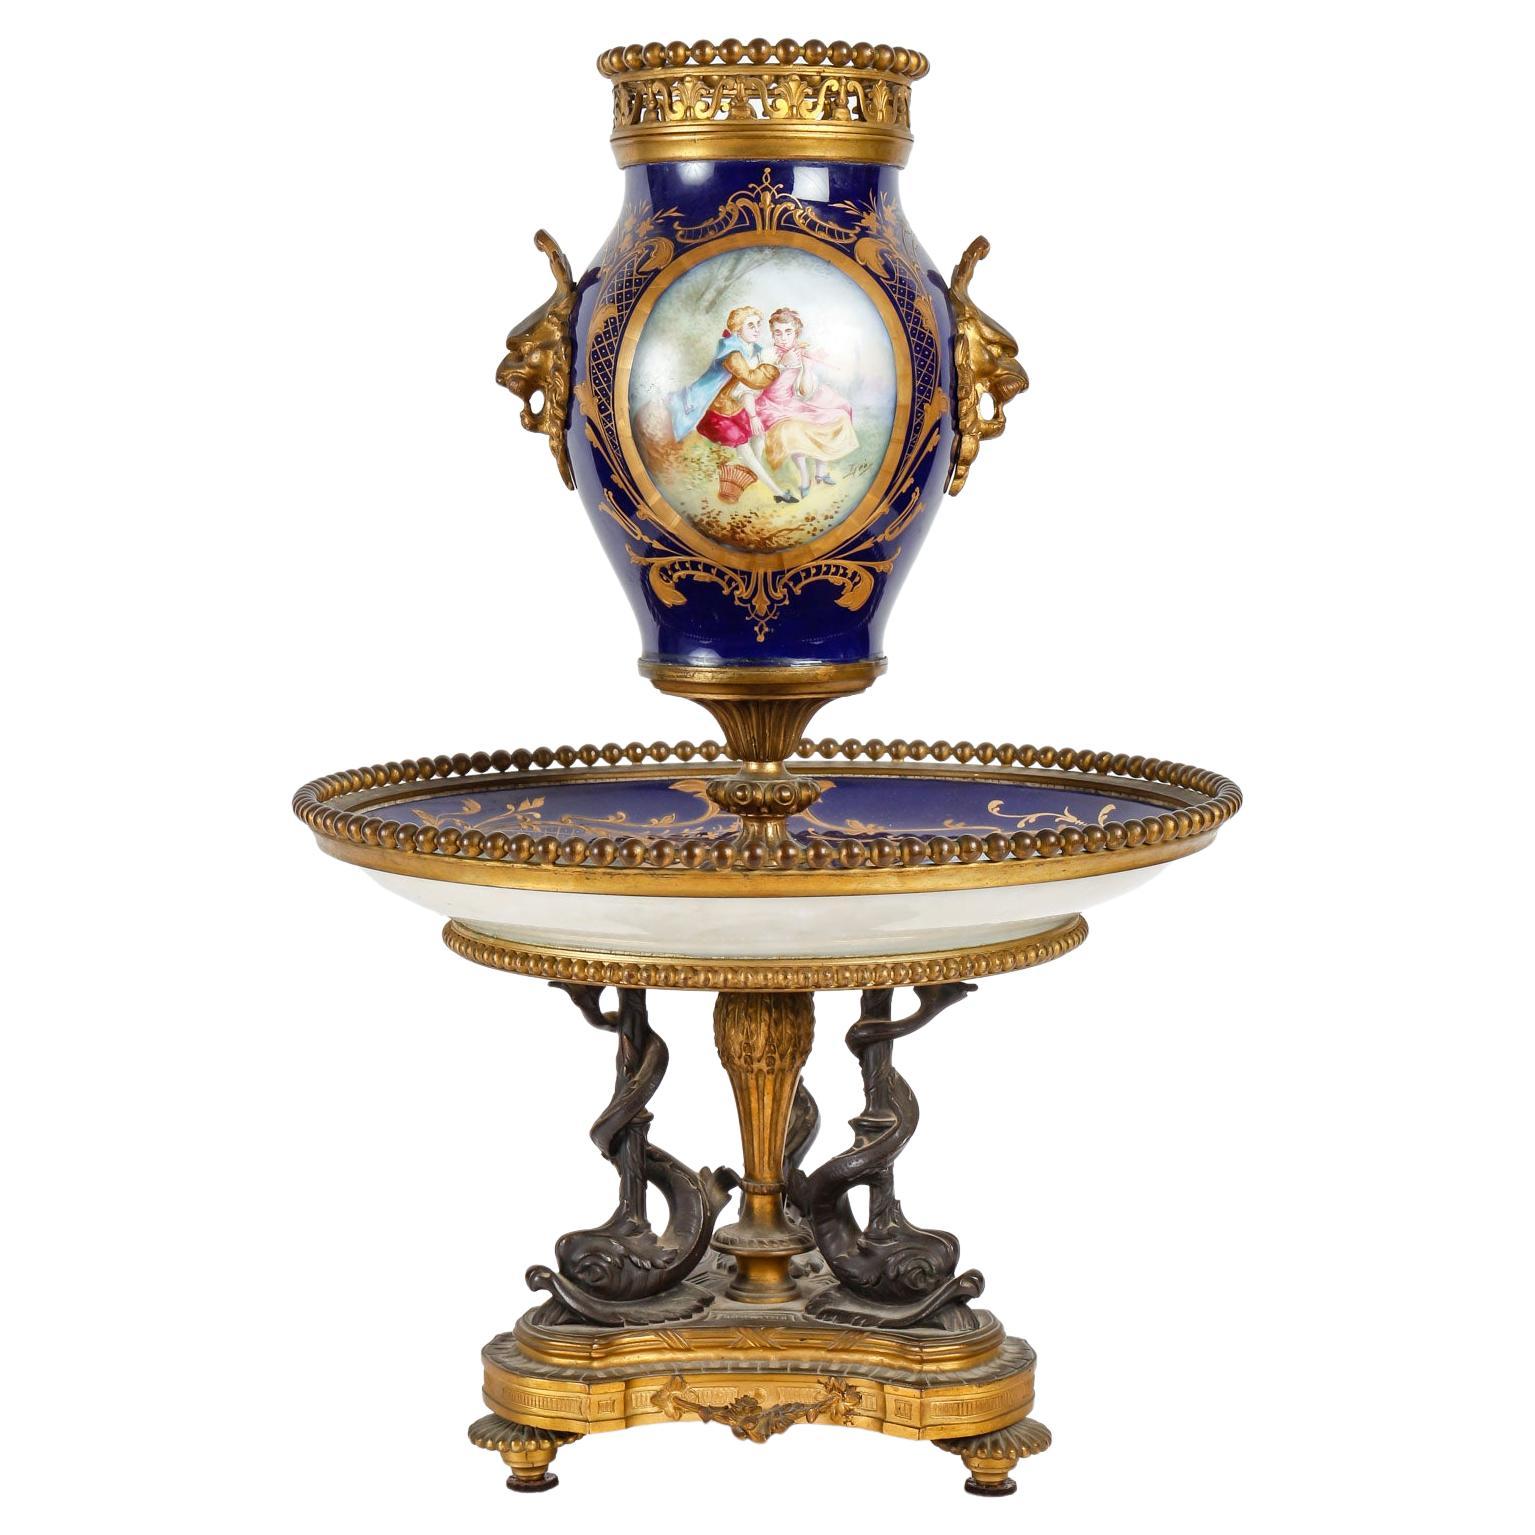 A 19th Century French Napoléon III Sèvres Porcelain Surtout de Table